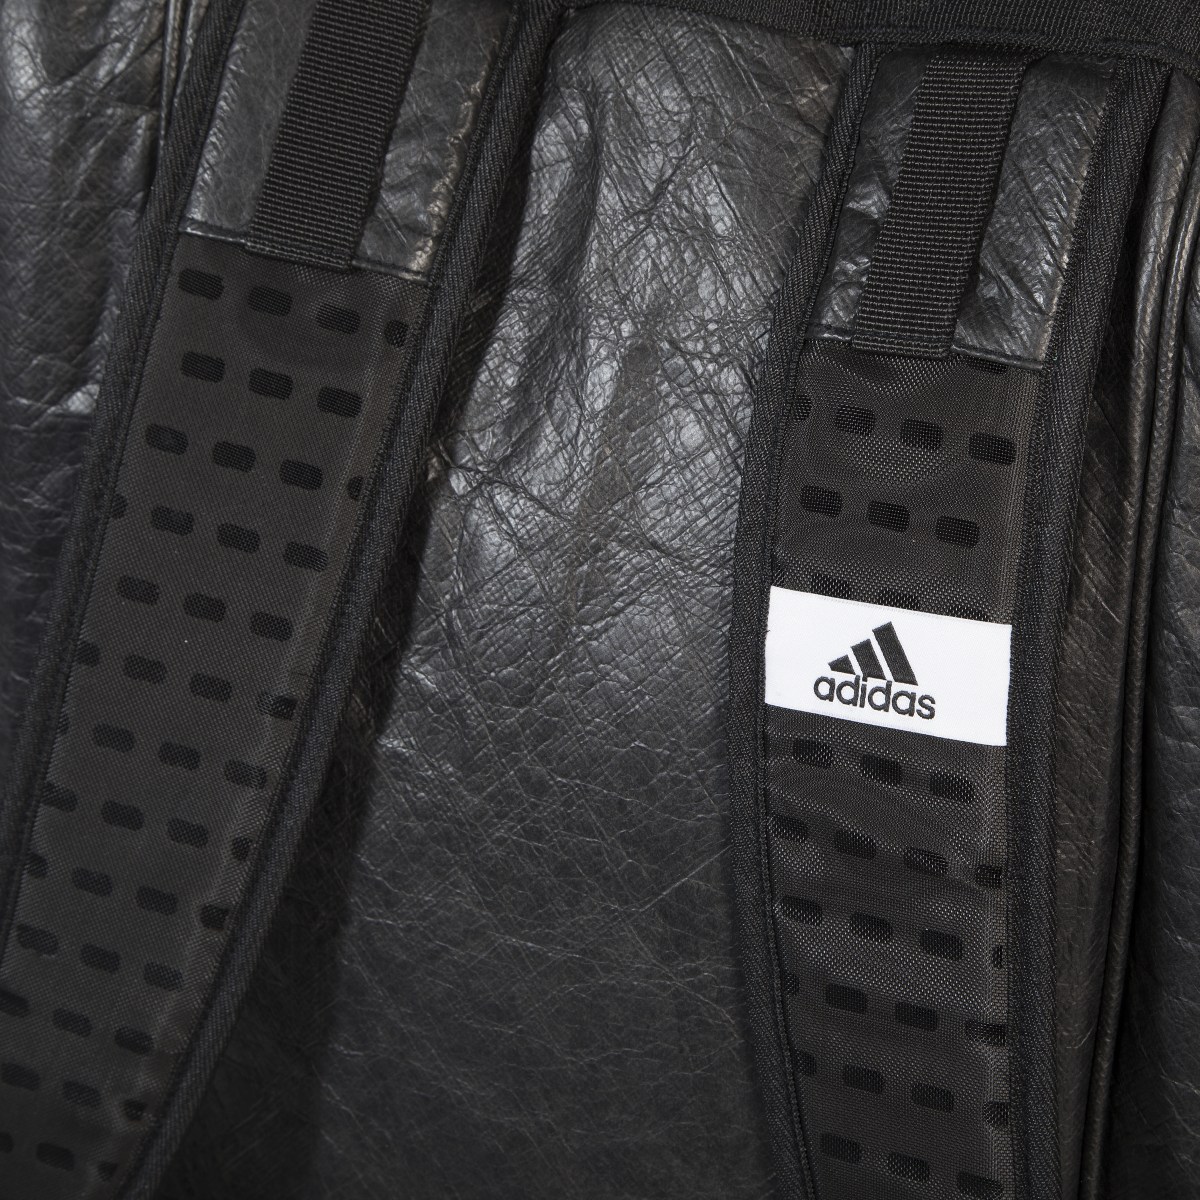 Adidas Multigame Racquet Bag. 5